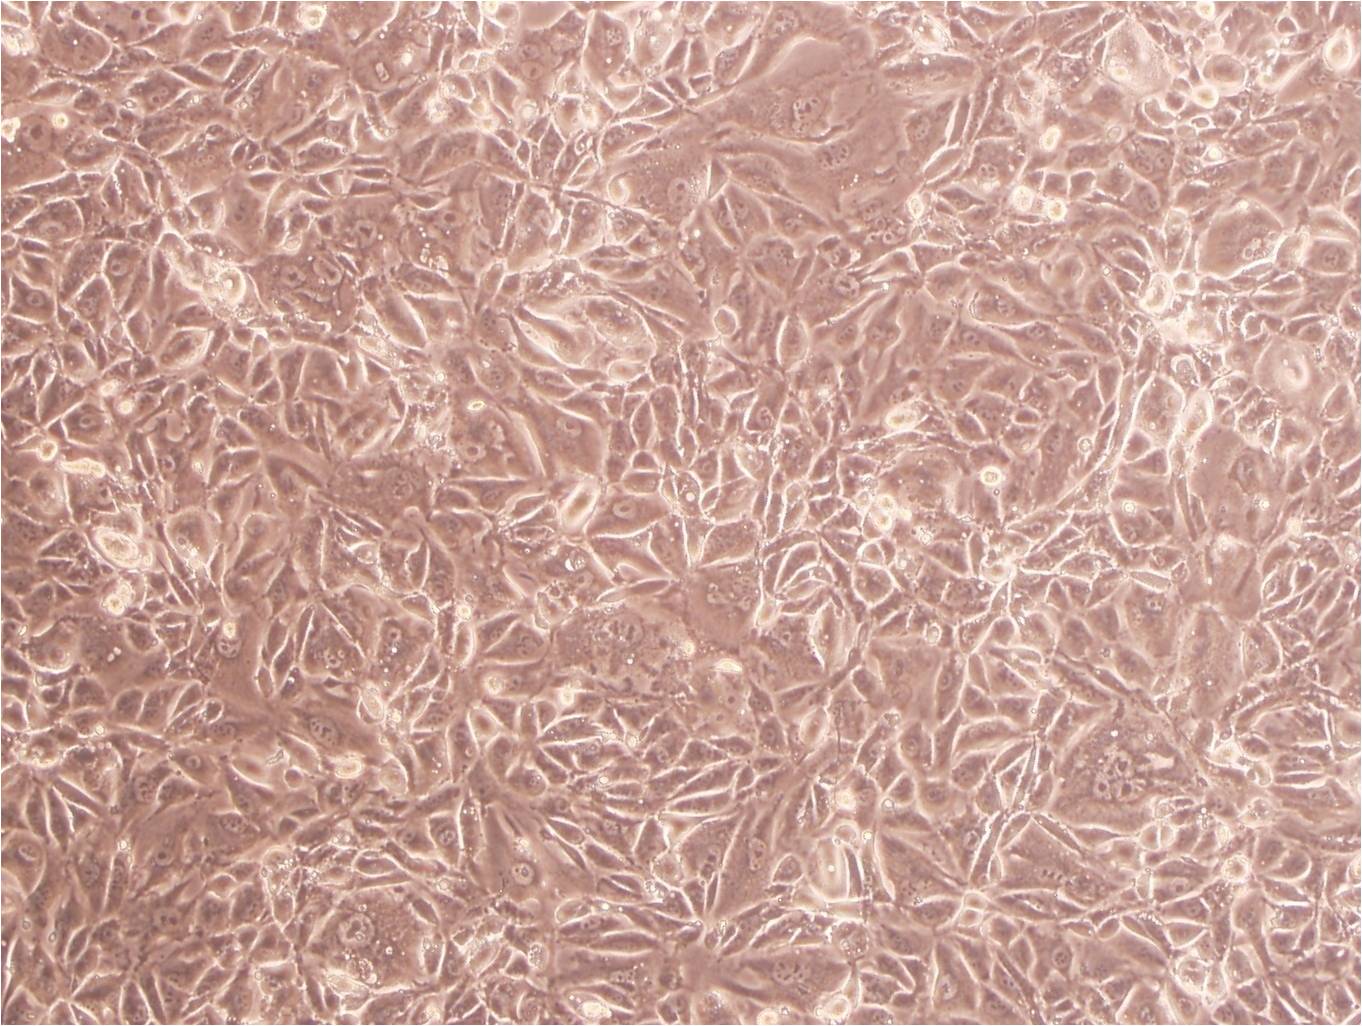 C8161 cell line人黑色素瘤细胞系,C8161 cell line